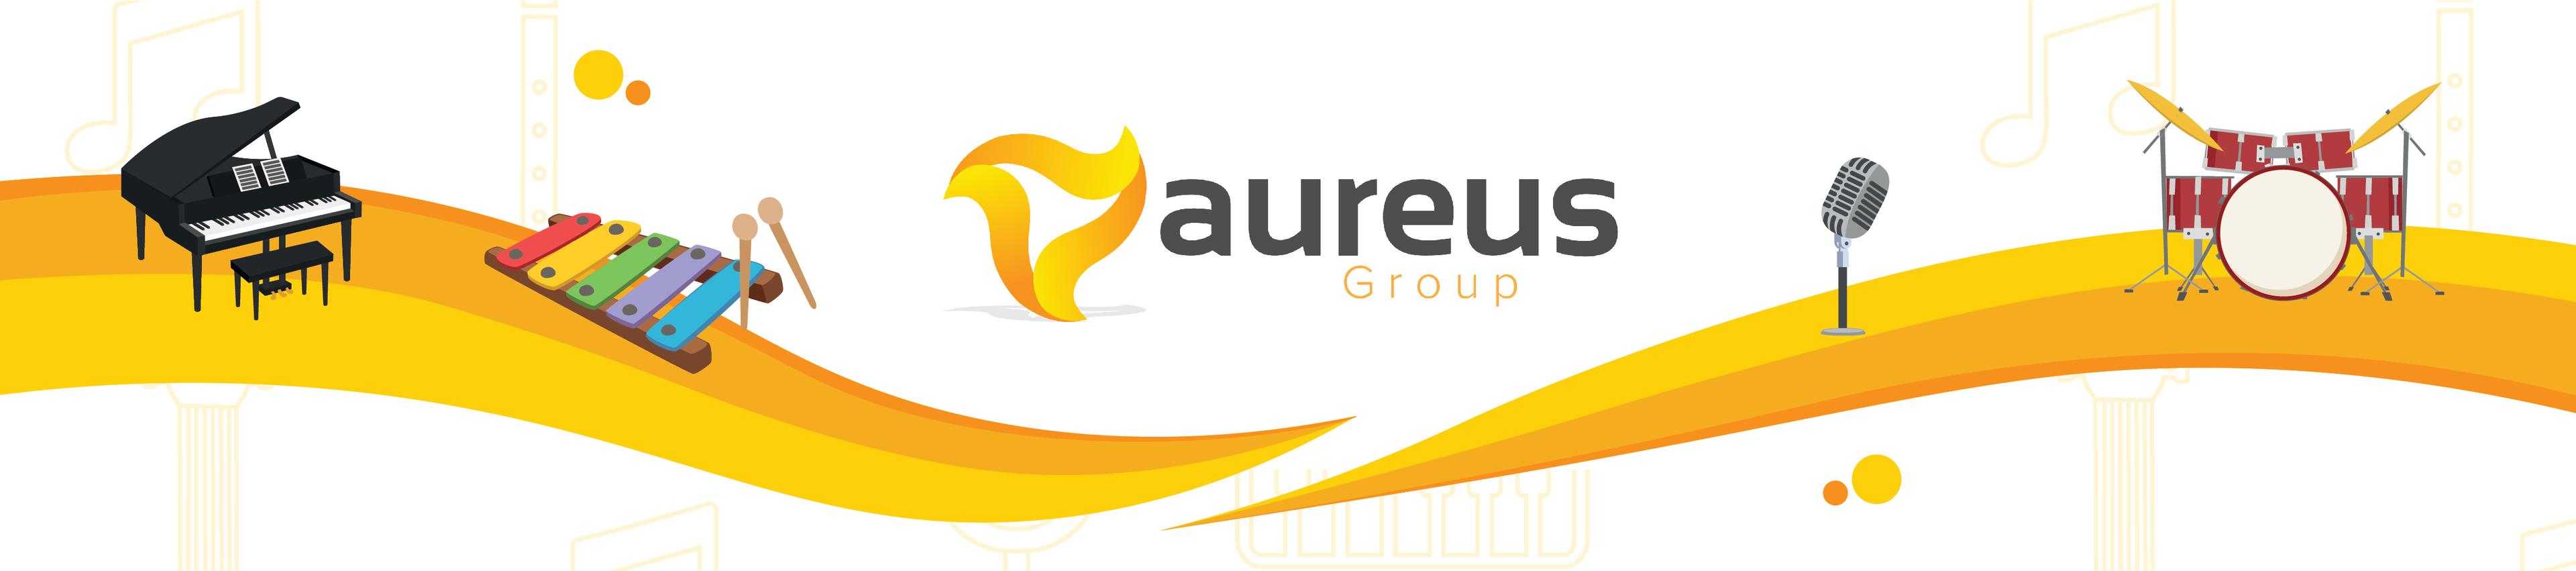 Aureus Group Pte Ltd header cover image